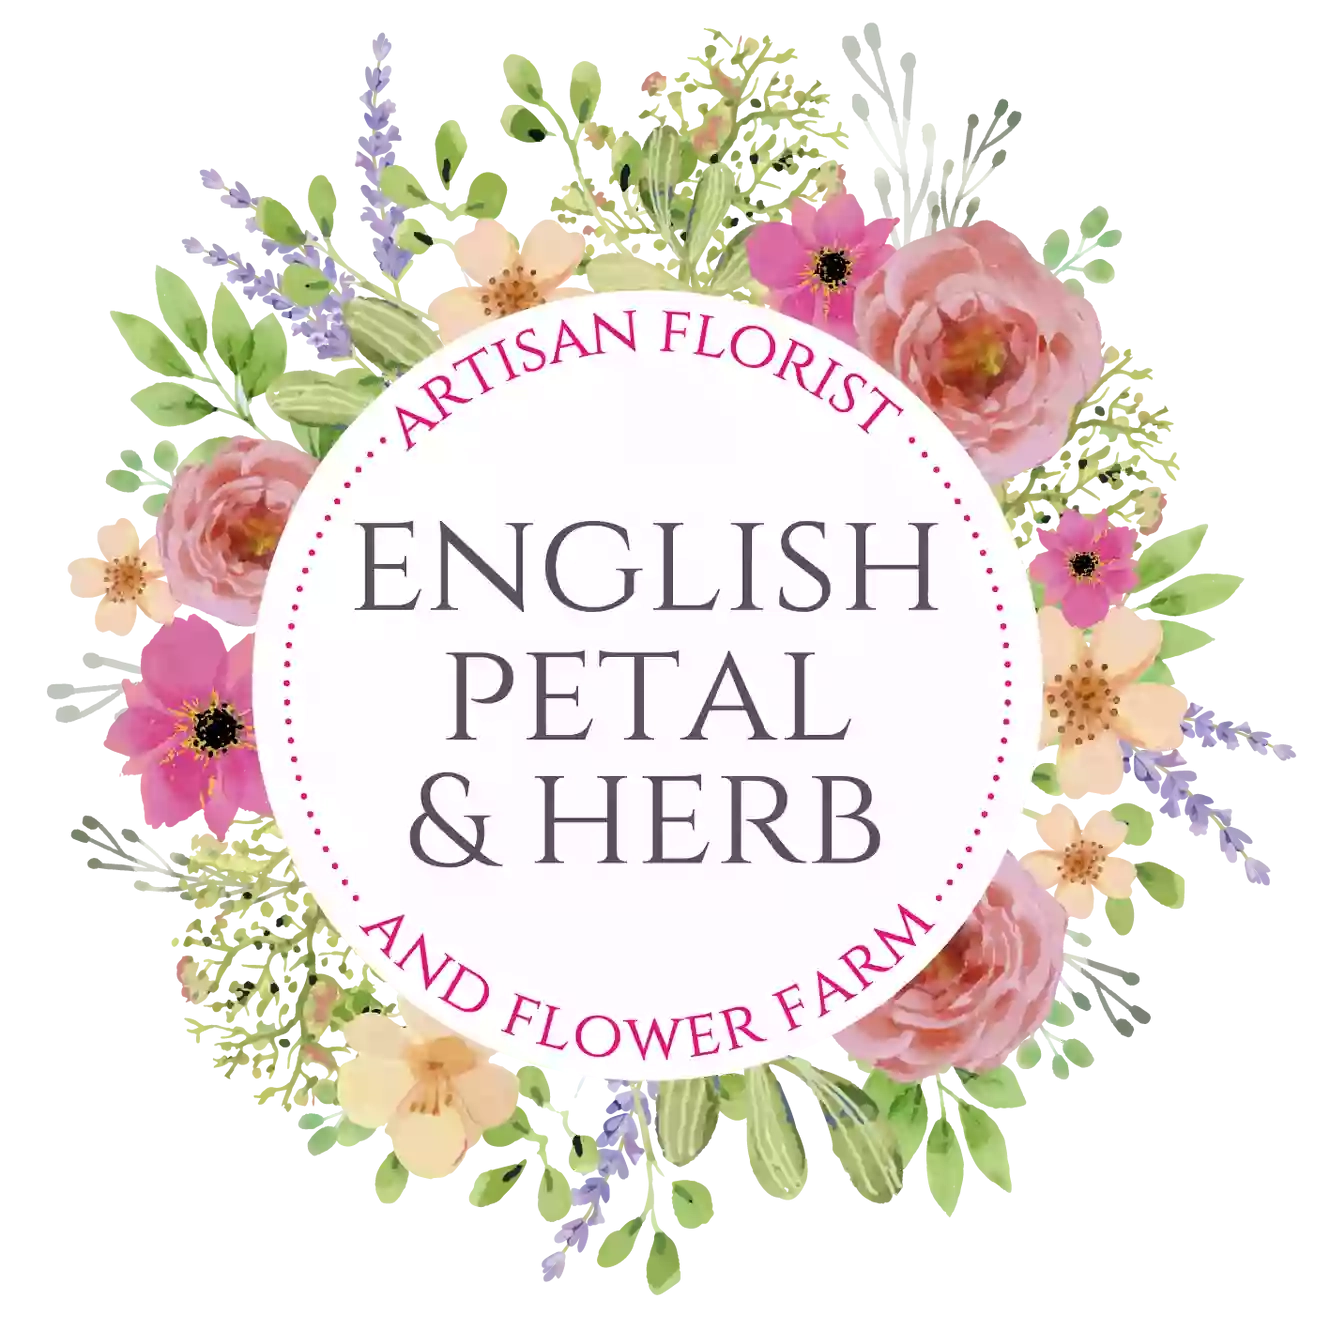 Artisan Florist English Petal and Herb Flower Farm